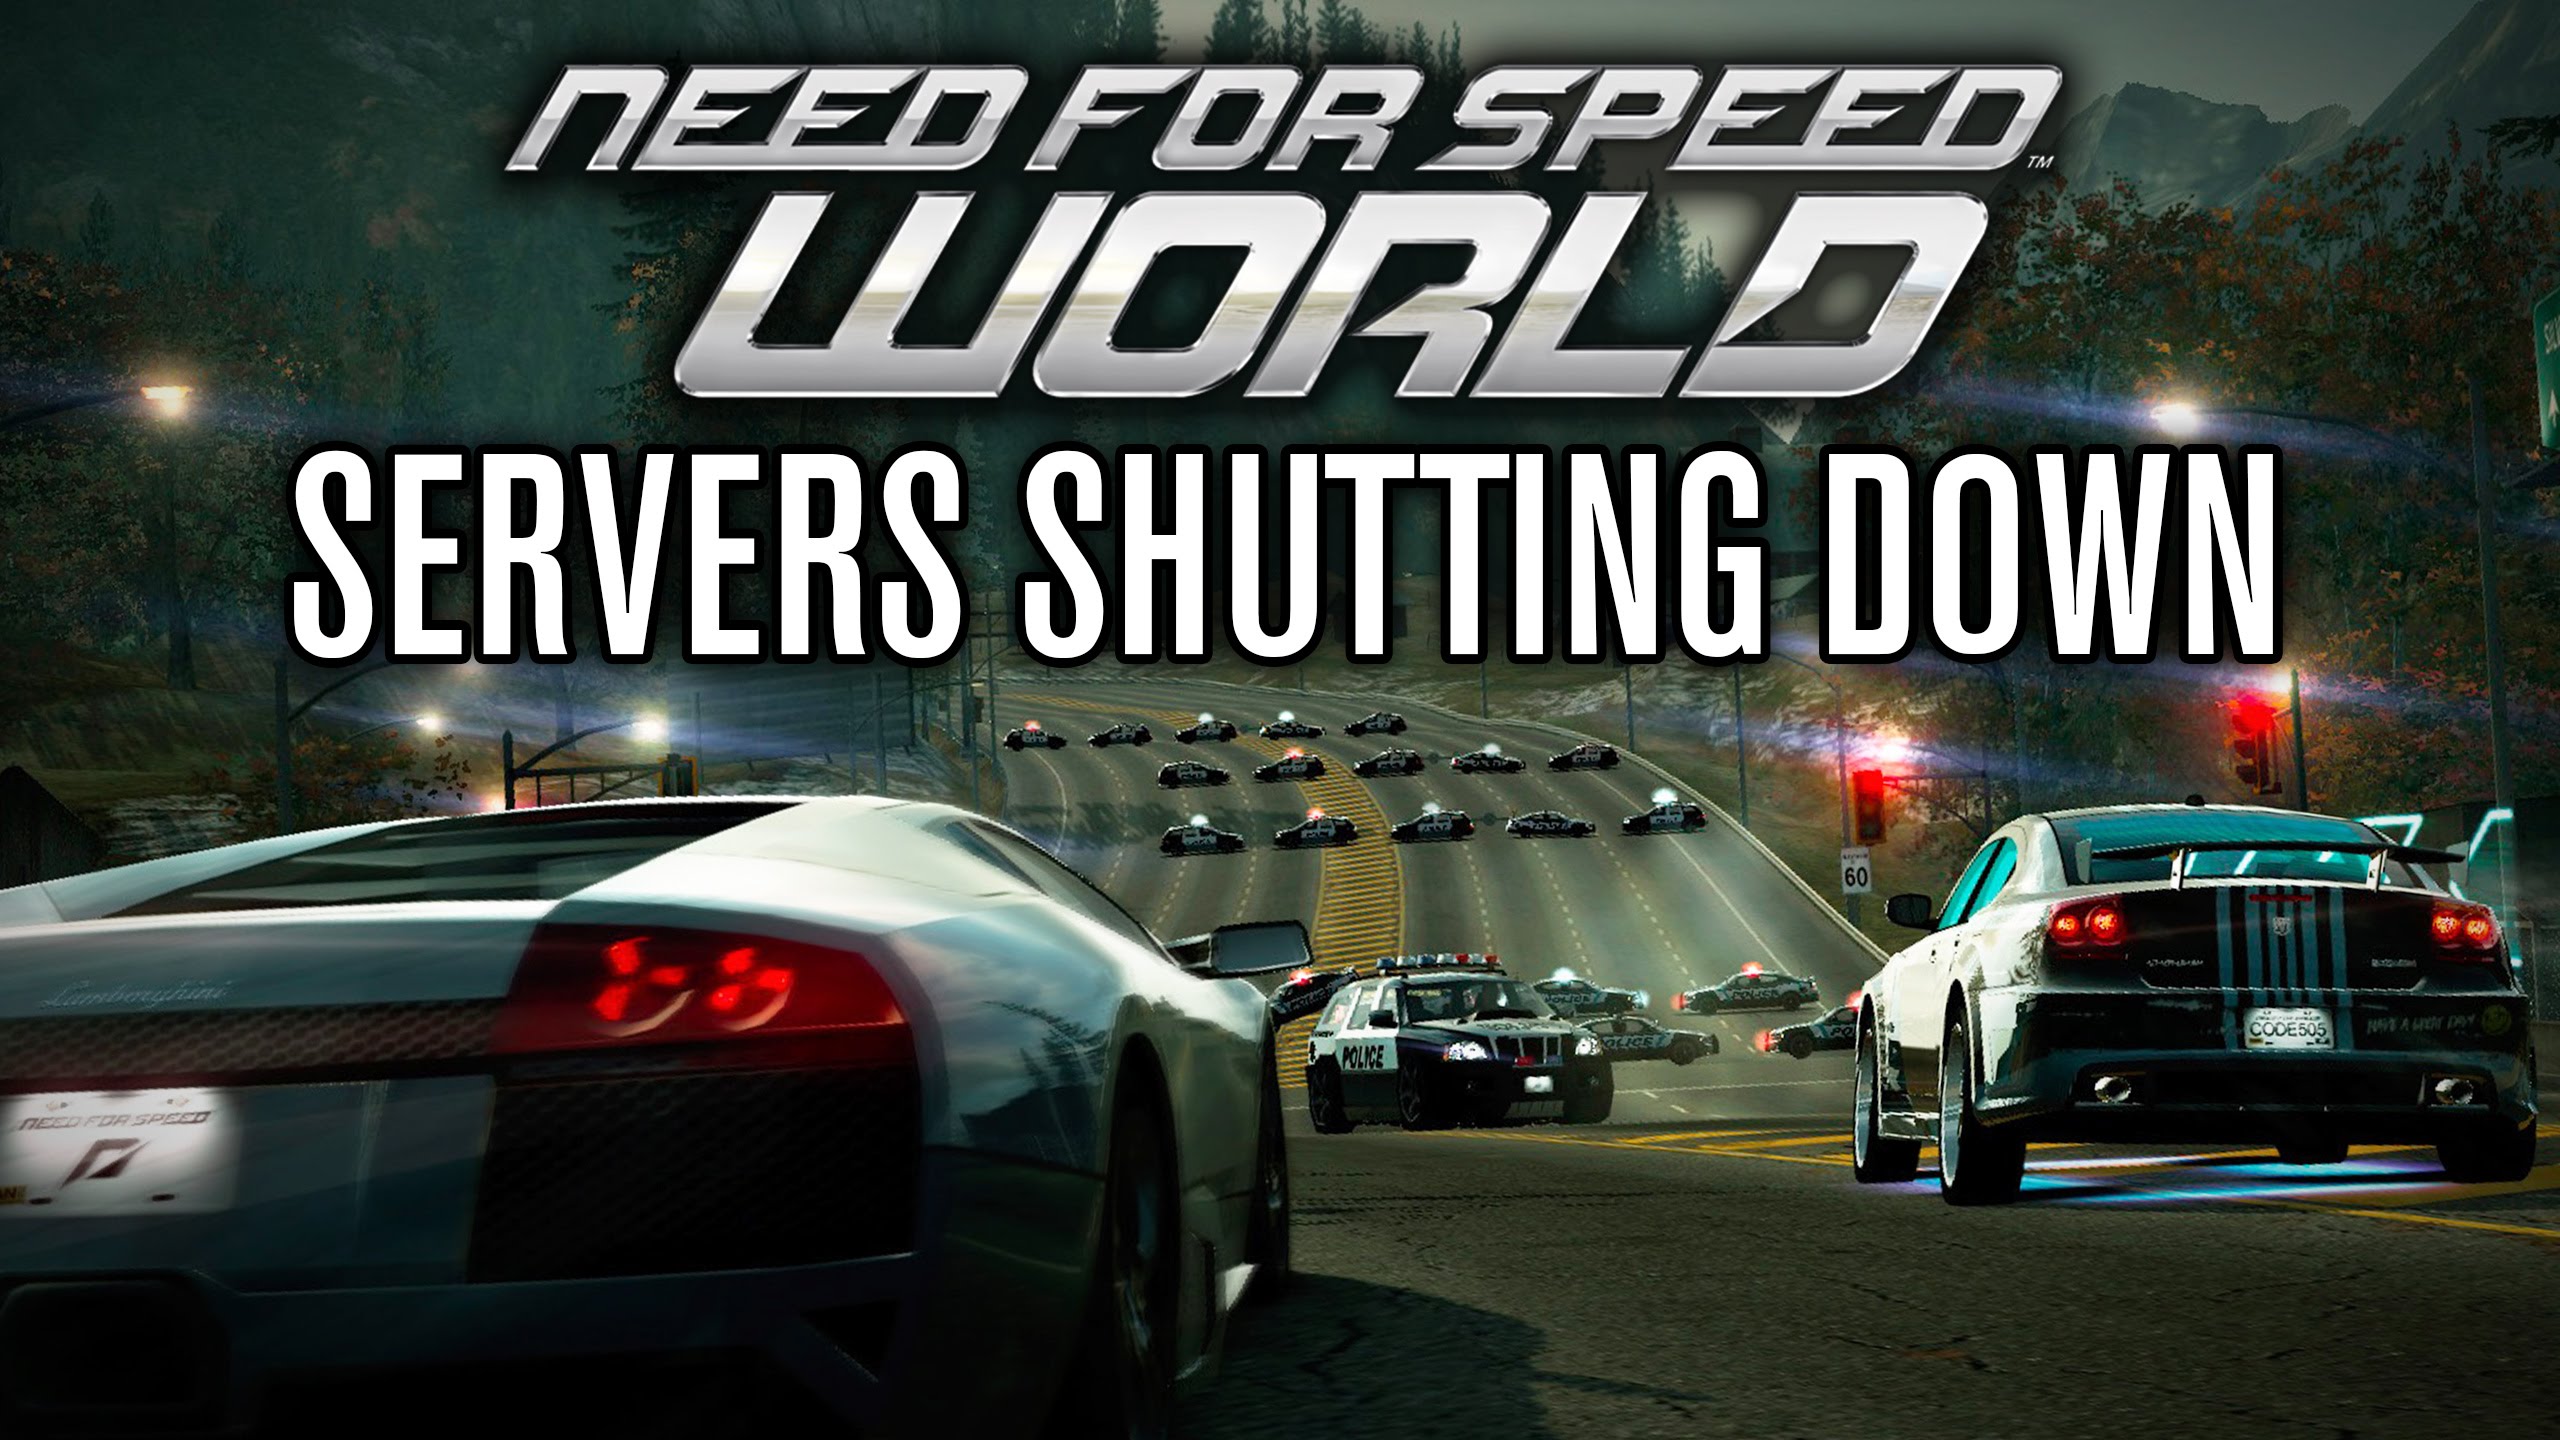 Need For Speed World HD wallpapers, Desktop wallpaper - most viewed